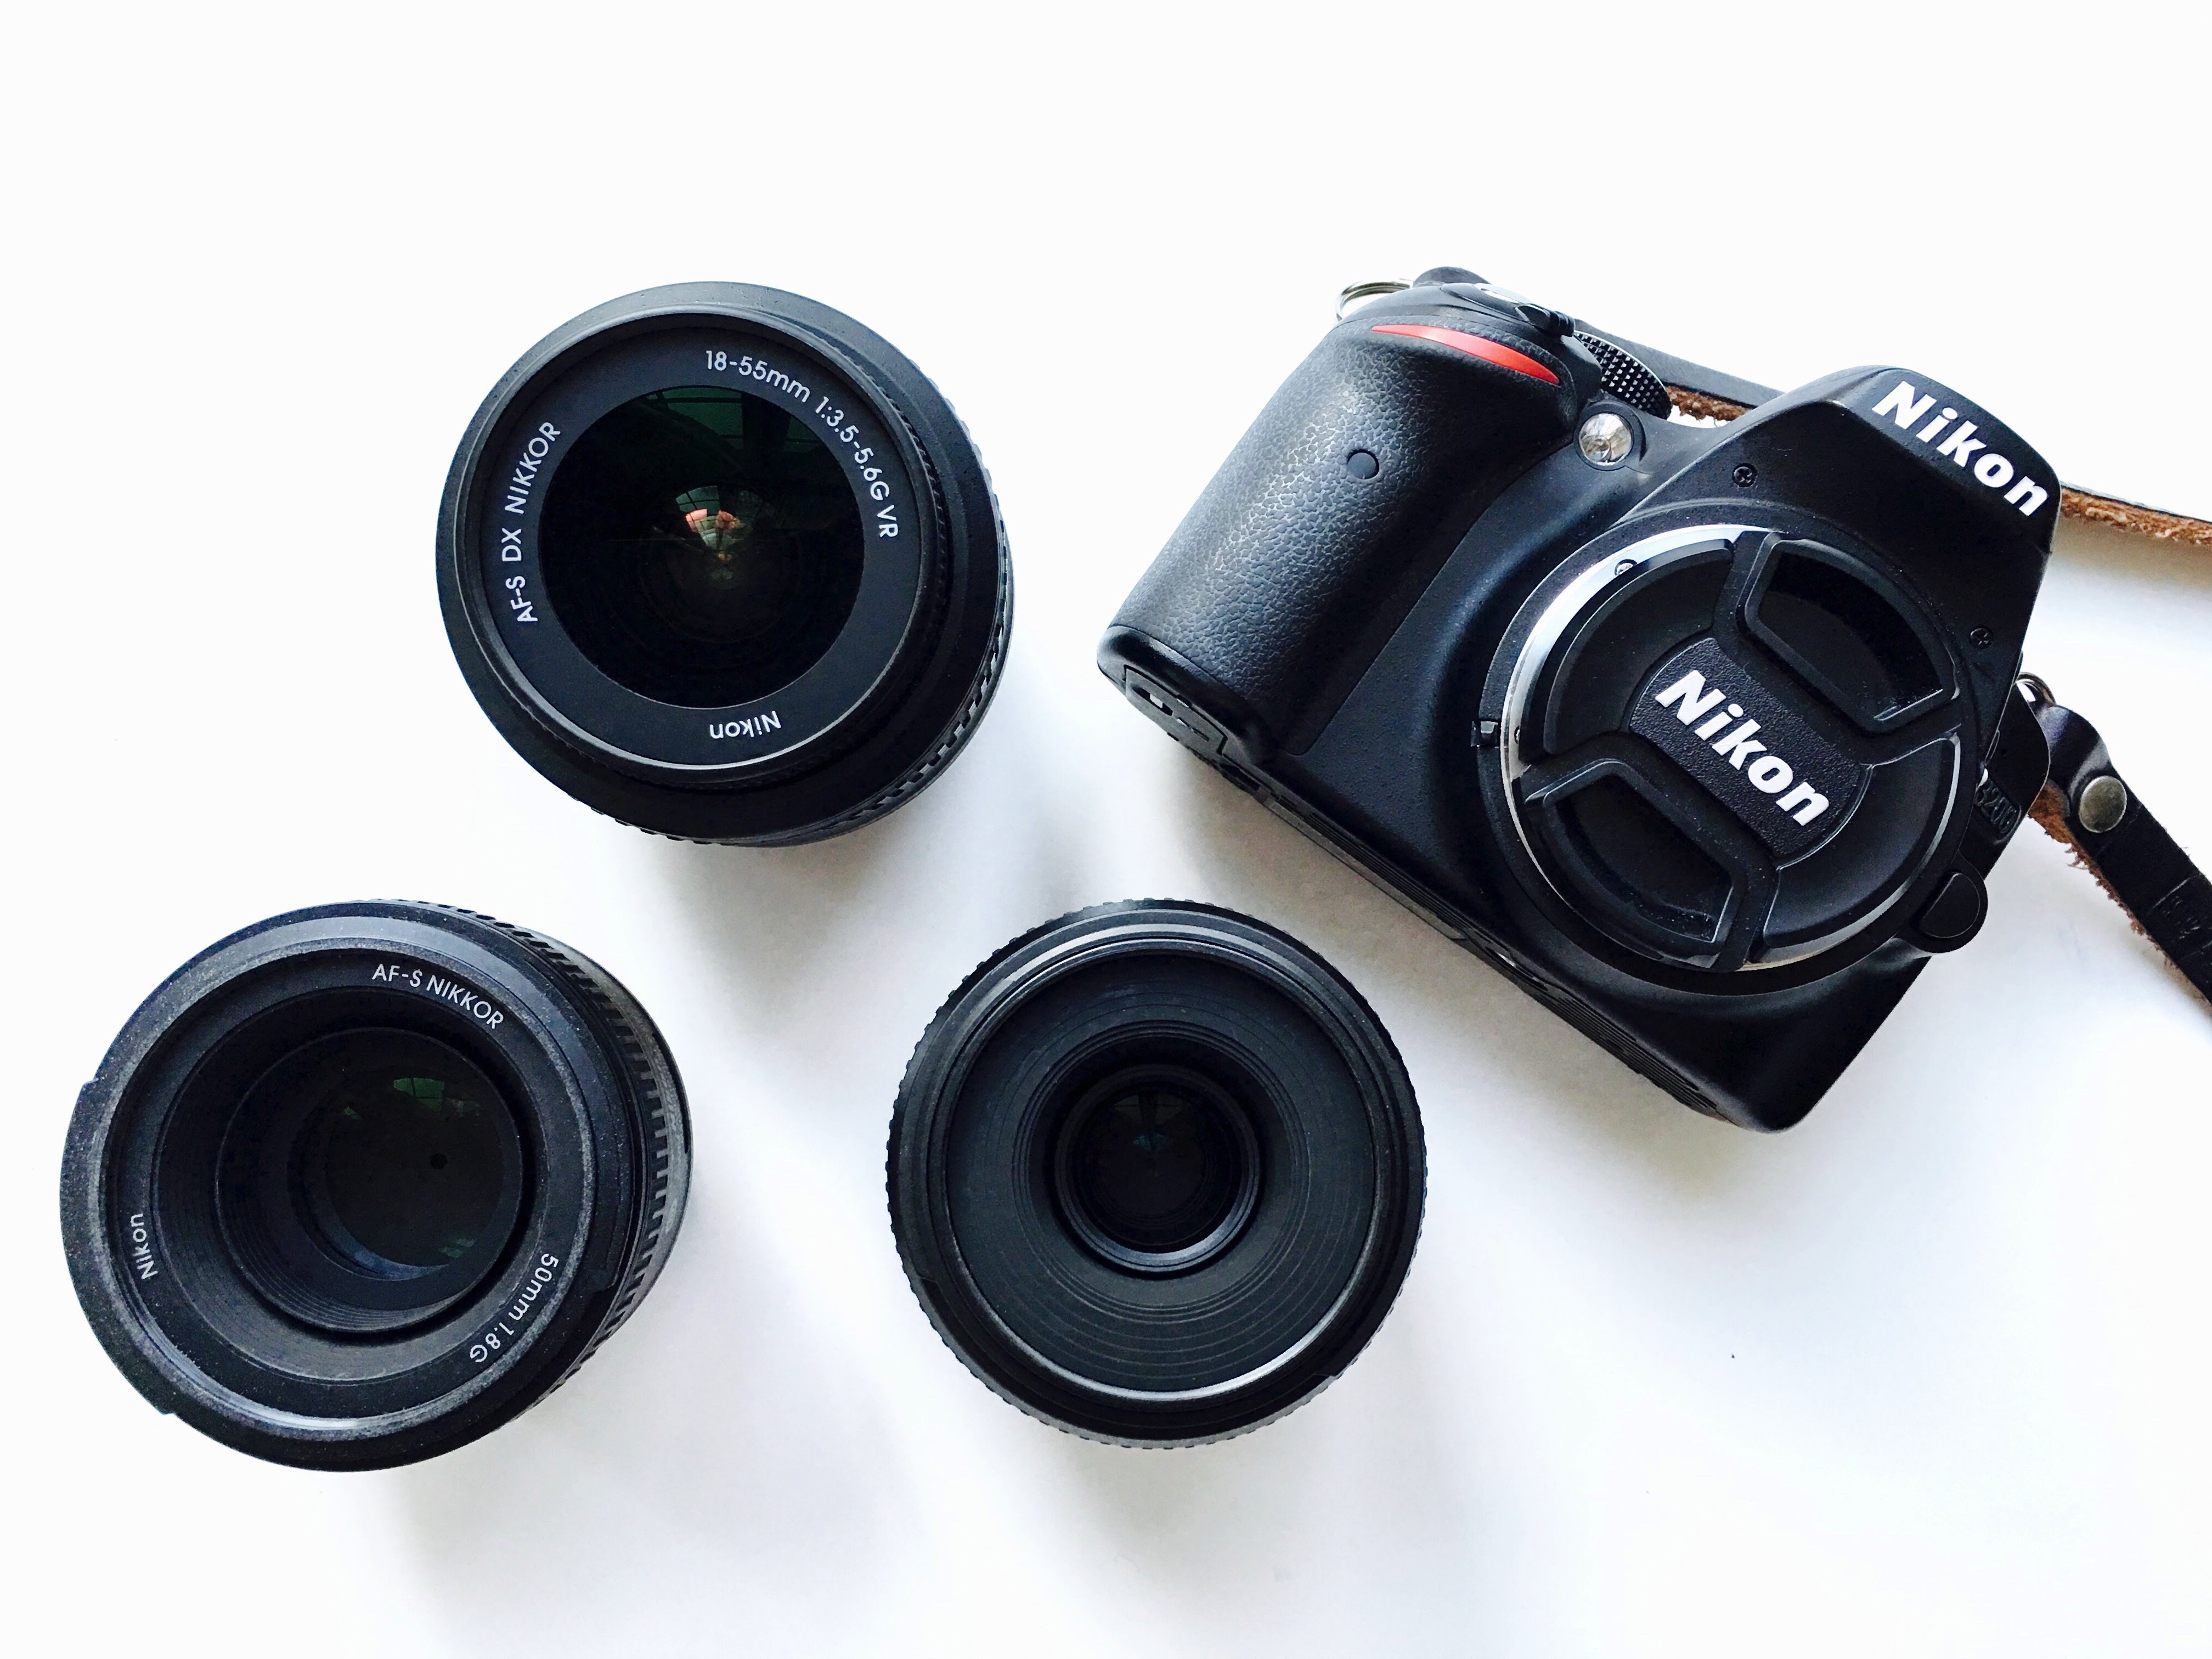 REVIEW: Nikon D3200 DSLR Camera and NIKKOR Lenses